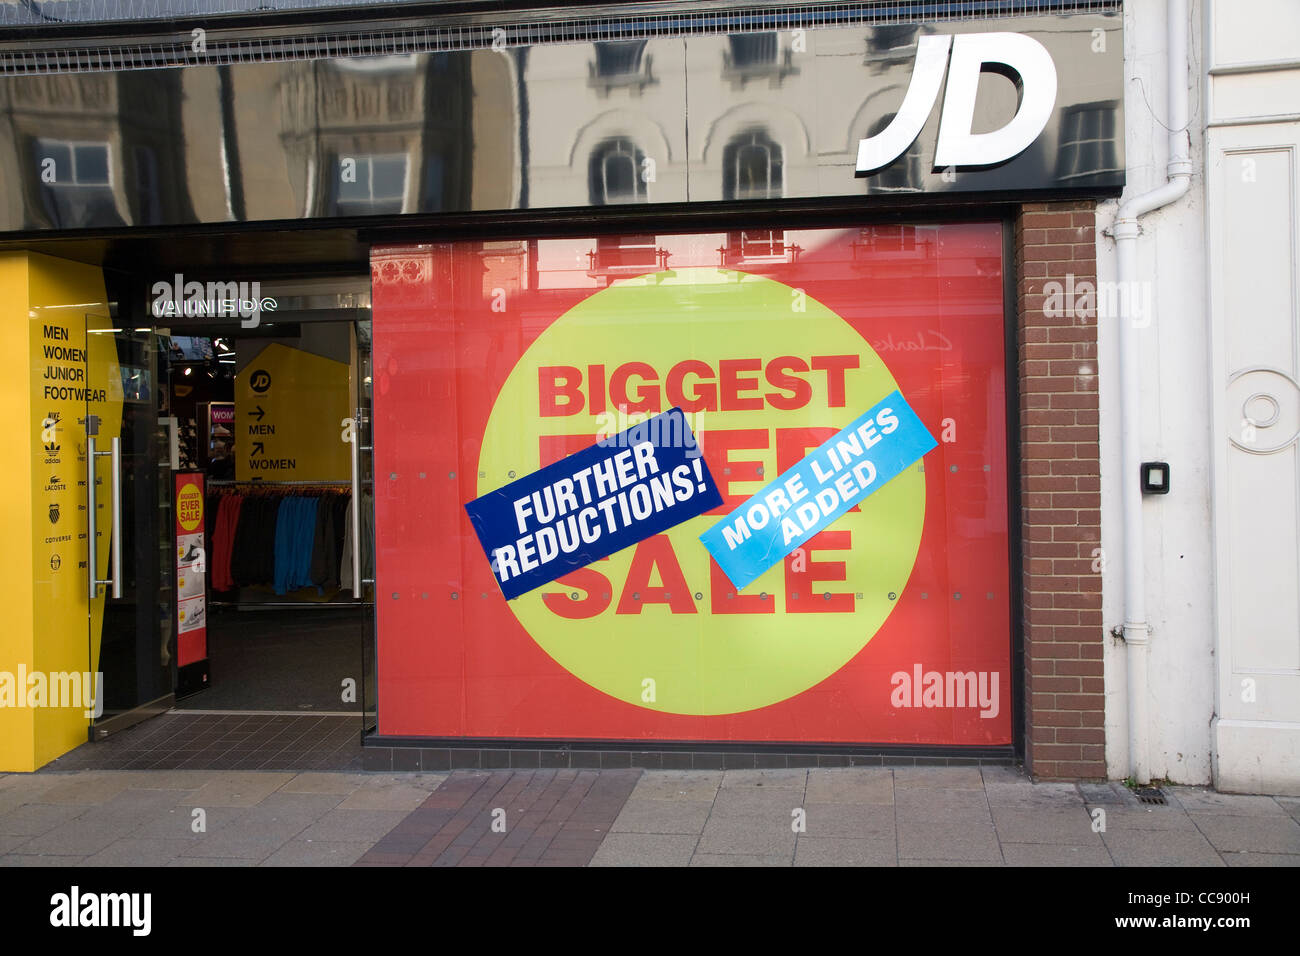 JD shop sale window poster Stock Photo - Alamy